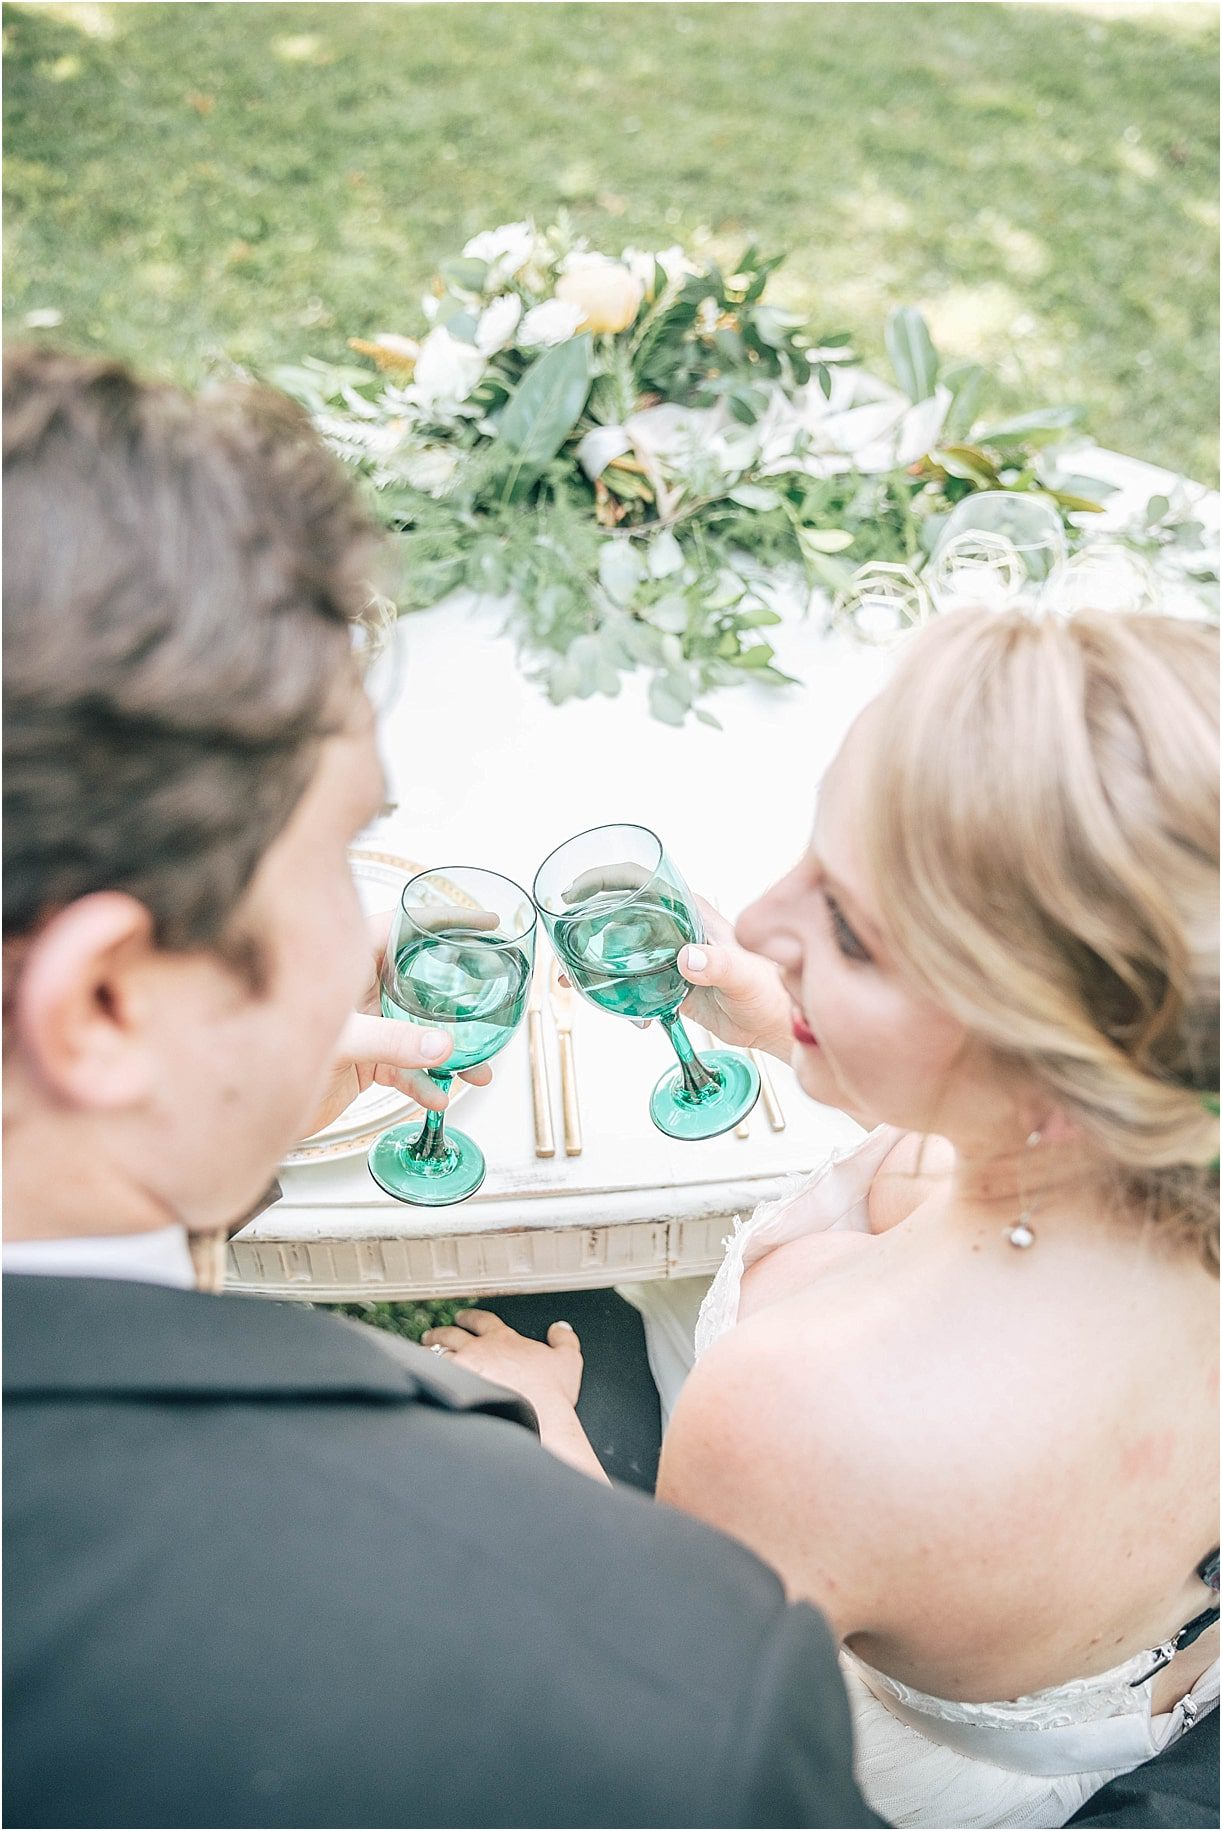 An Intimate Secret Garden Wedding in Virginia | Hill City Bride Virginia Wedding Inspiration Blog Groom Sweetheart Table Toast